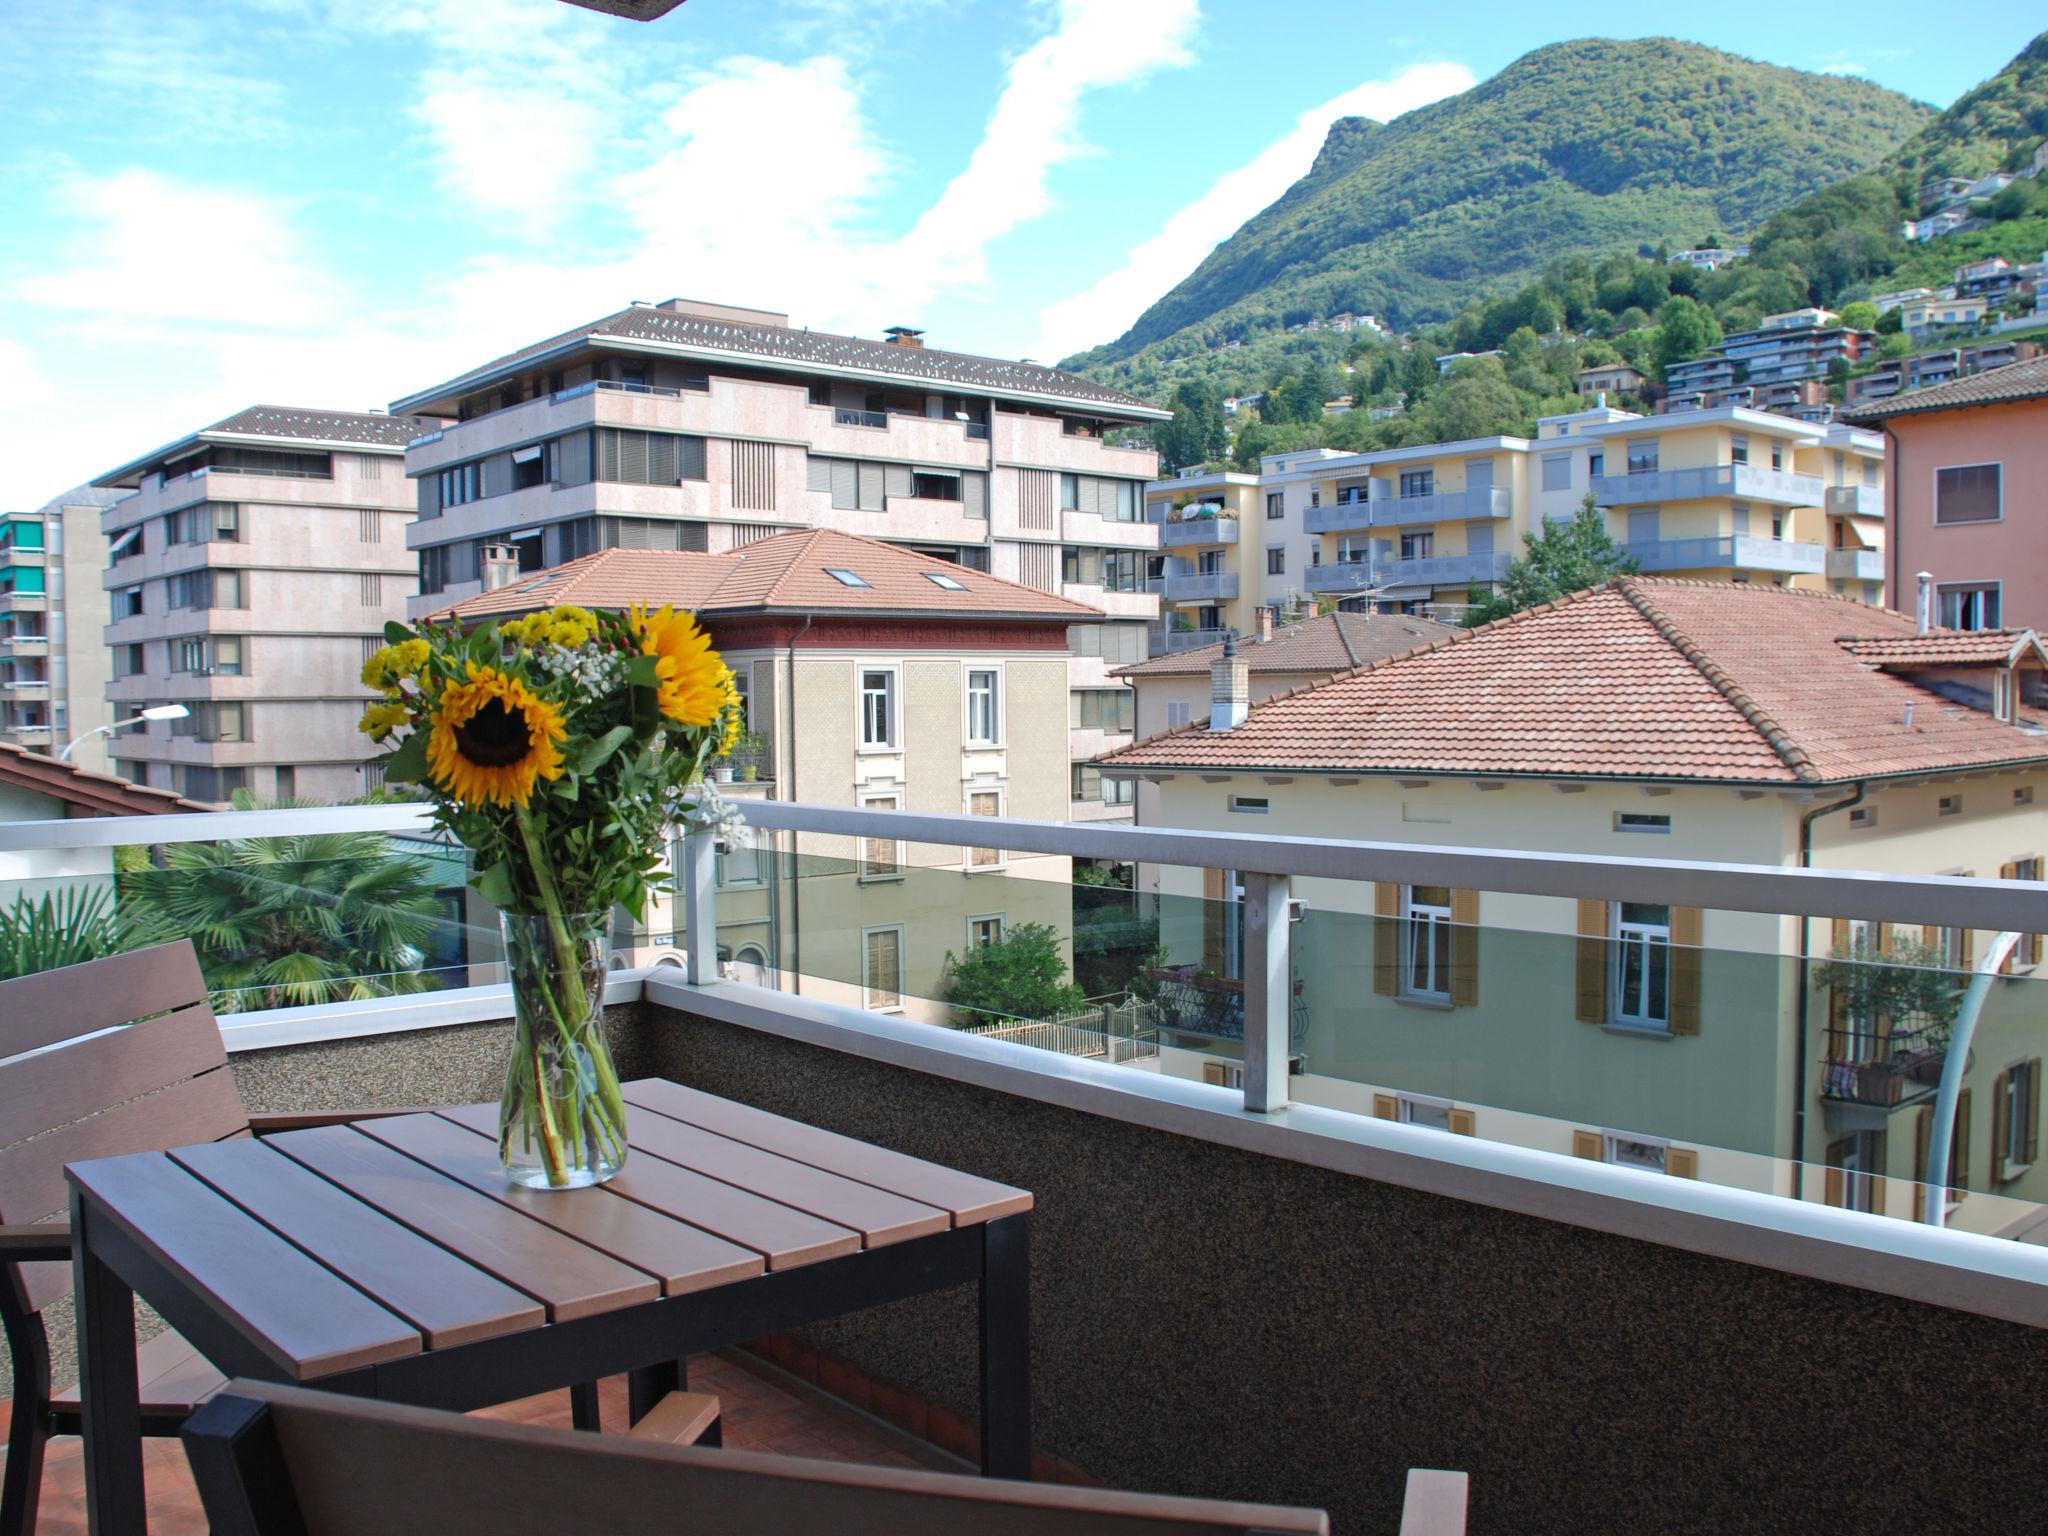 Foto 1 - Apartment in Lugano mit blick auf die berge